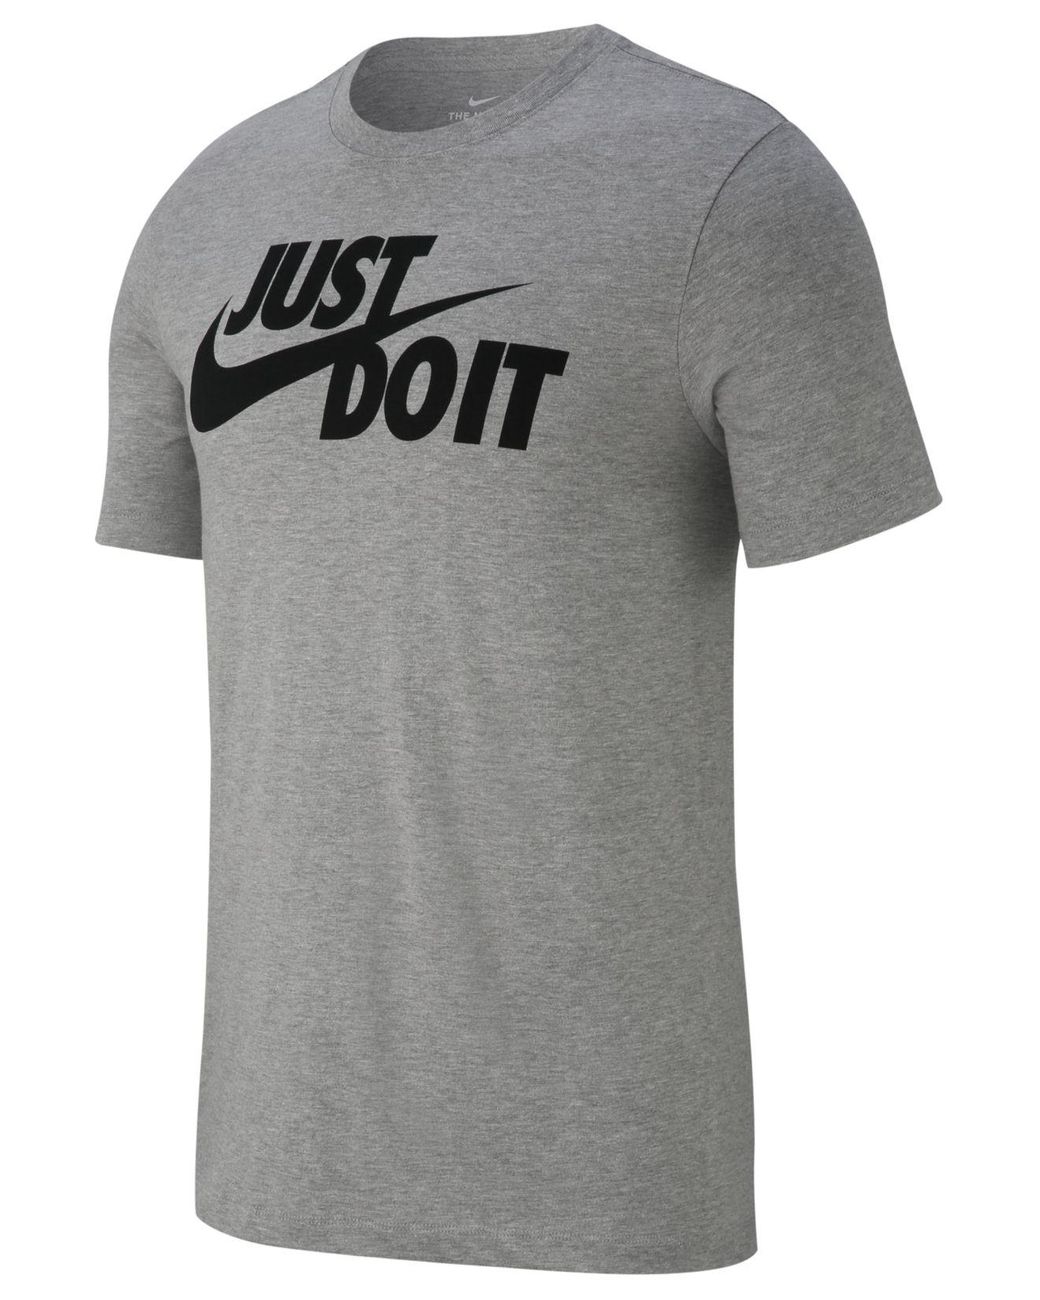 Nike Cotton Nsw Just Do It Swoosh Tee in Dark Grey Heather/Black (Gray ...